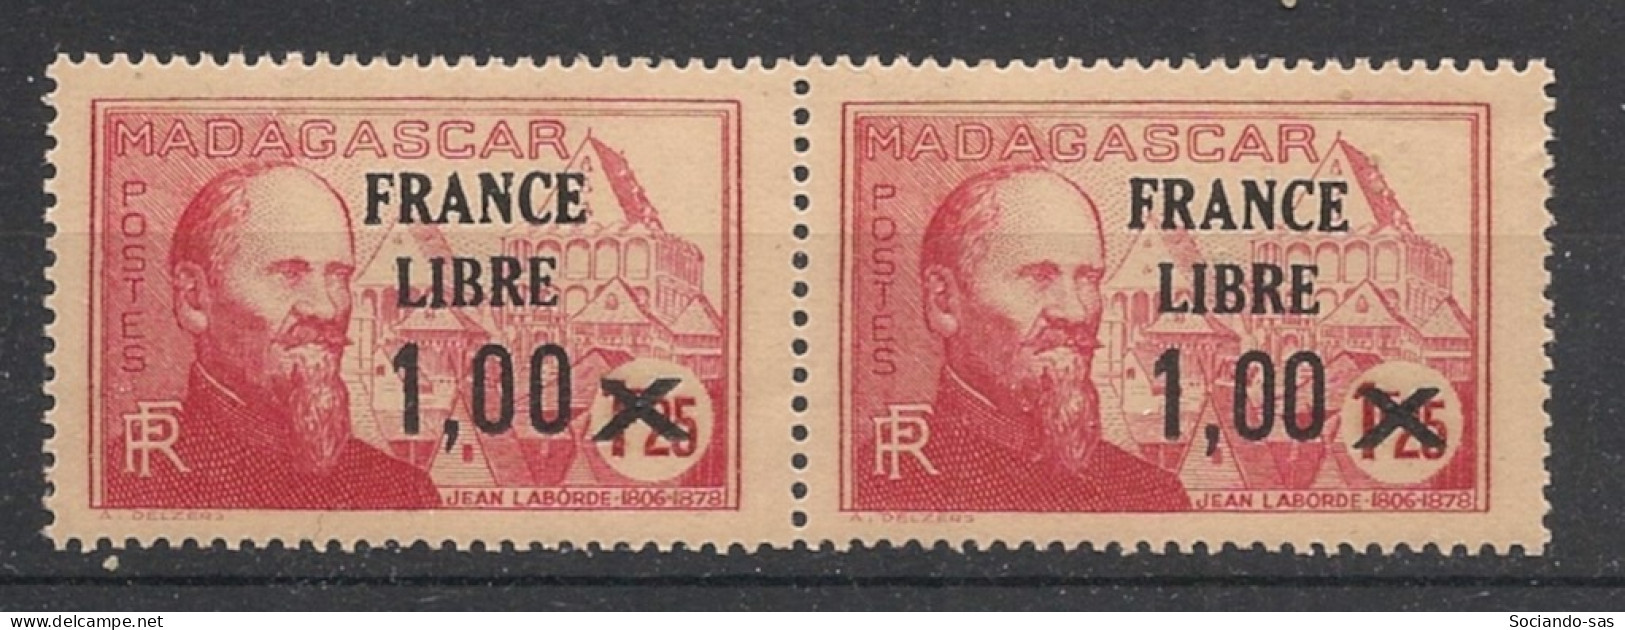 MADAGASCAR - 1942 - N°YT. 260b - France Libre 1,00 Sur 1f25 - VARIETE Surcharge Espacée T.a.n. - Neuf Luxe ** / MNH - Ongebruikt